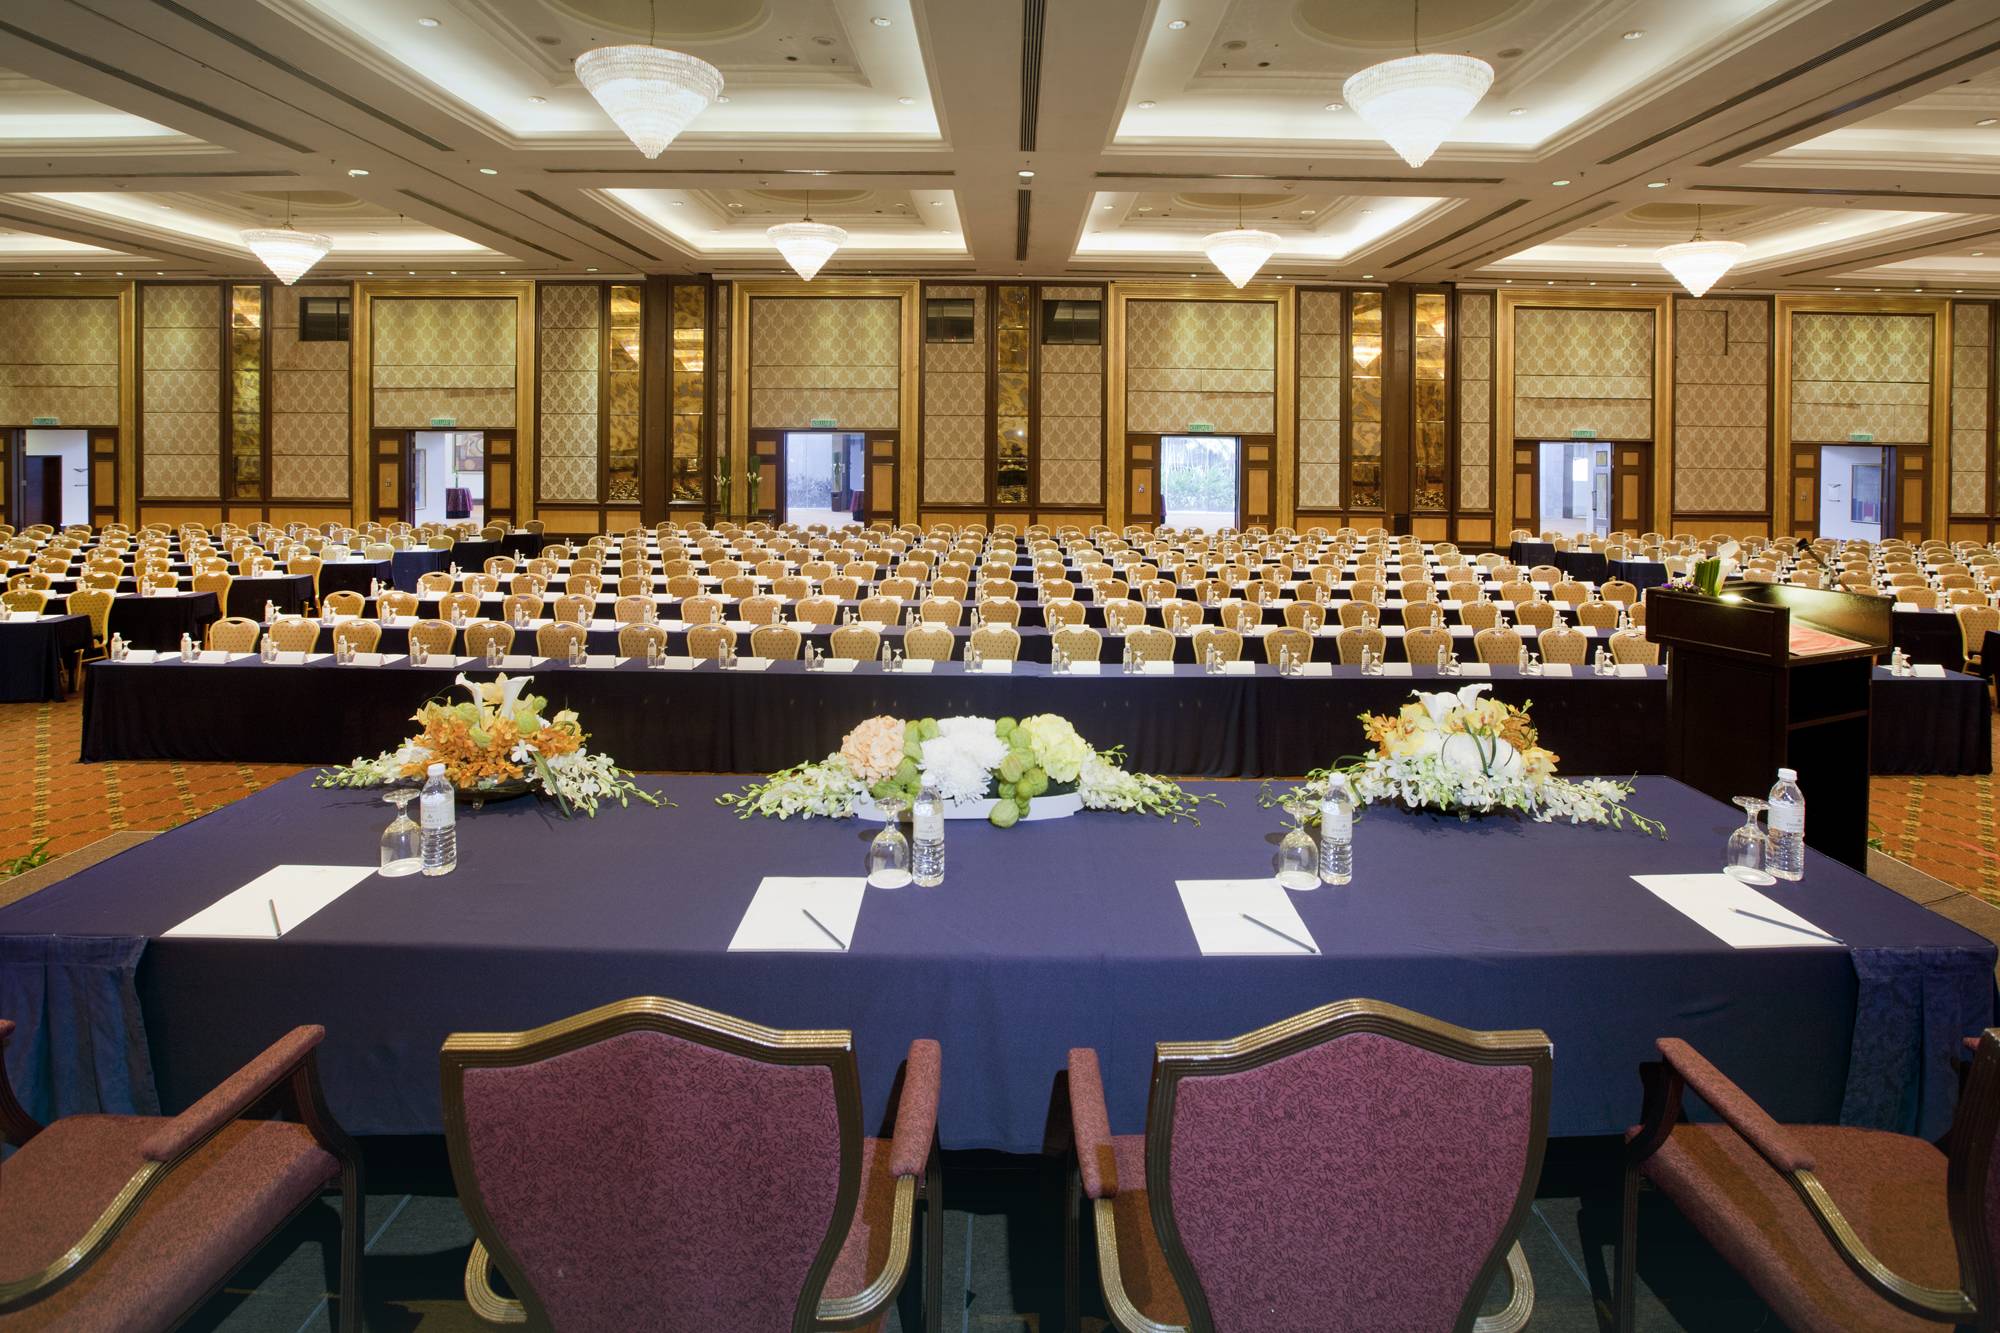 Dorsett Grand Subang pillarless ballroom…the ideal venue for international conferences, conventions and seminars